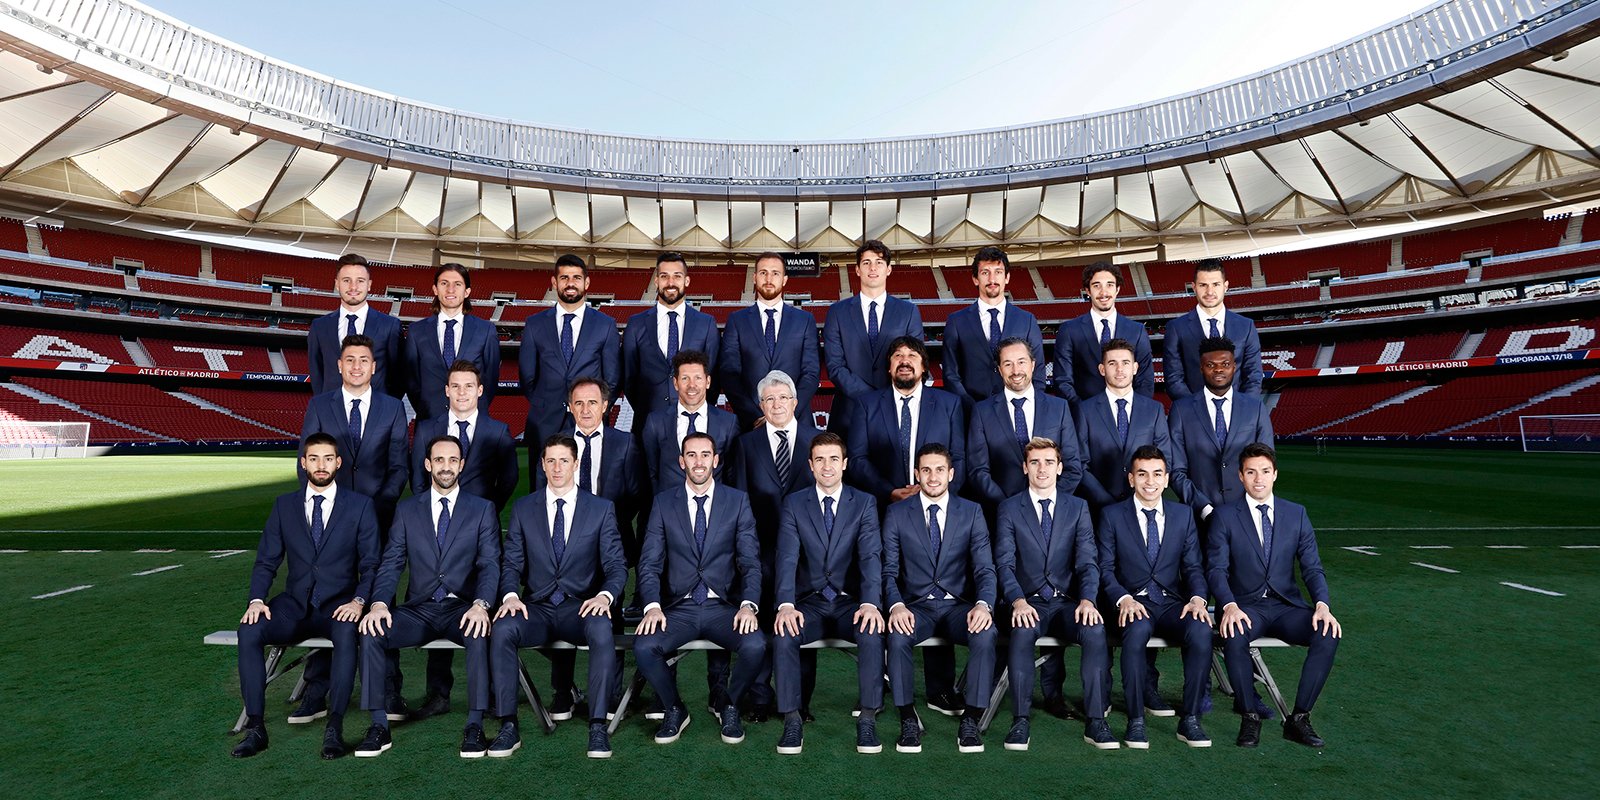 Roberto Verino will “dress” the Atlético de Madrid soccer team for the 2016-2017 season